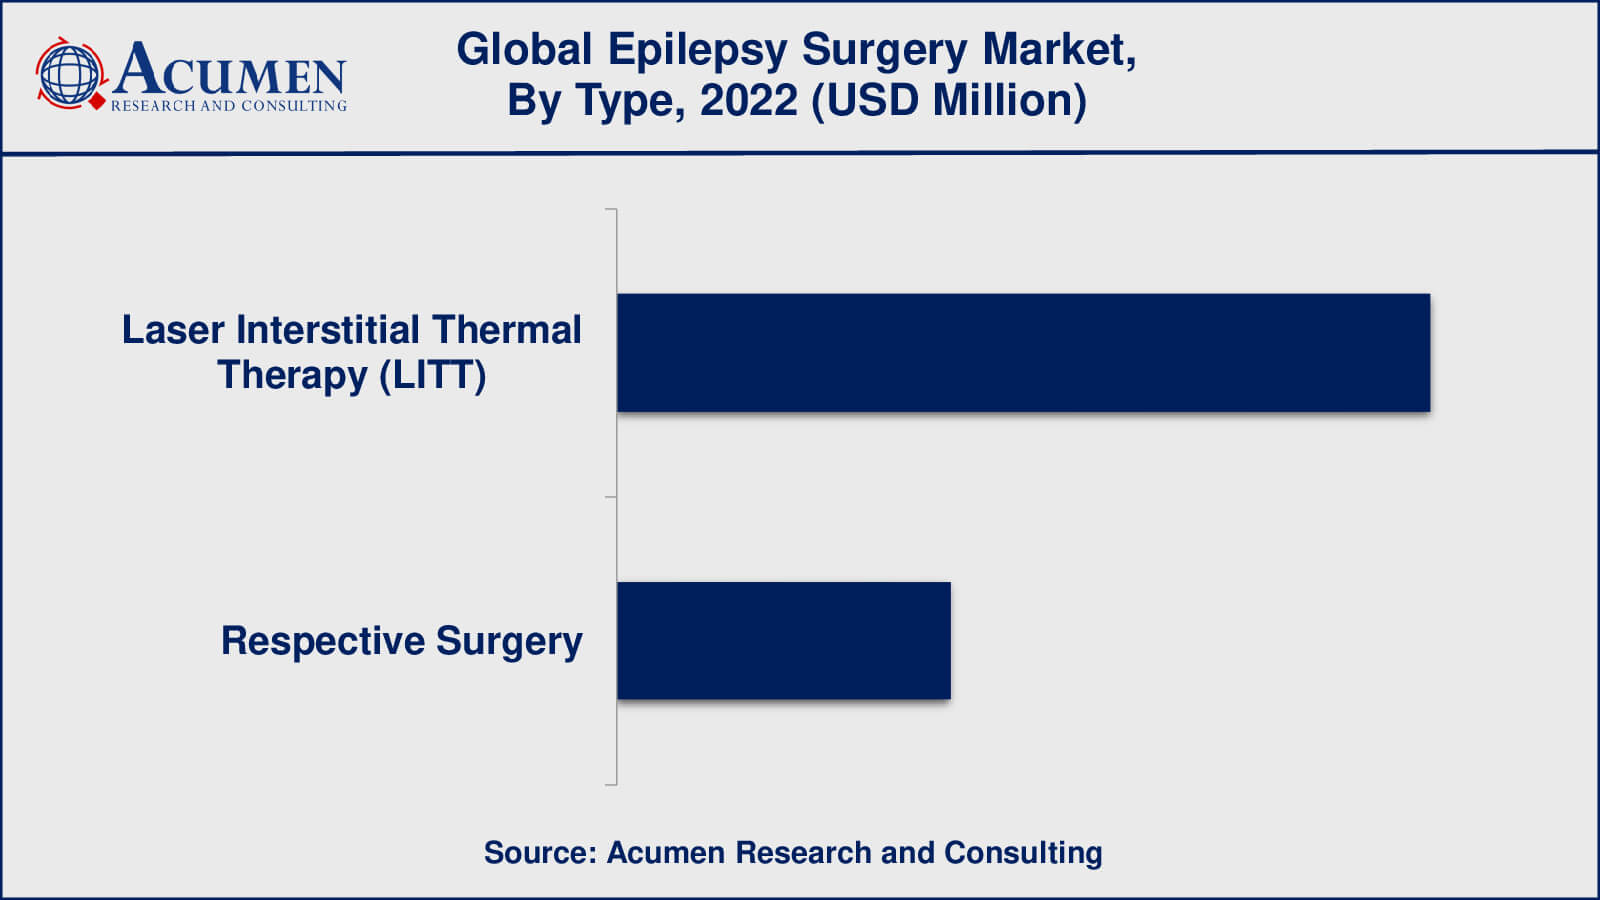 Epilepsy Surgery Market Analysis